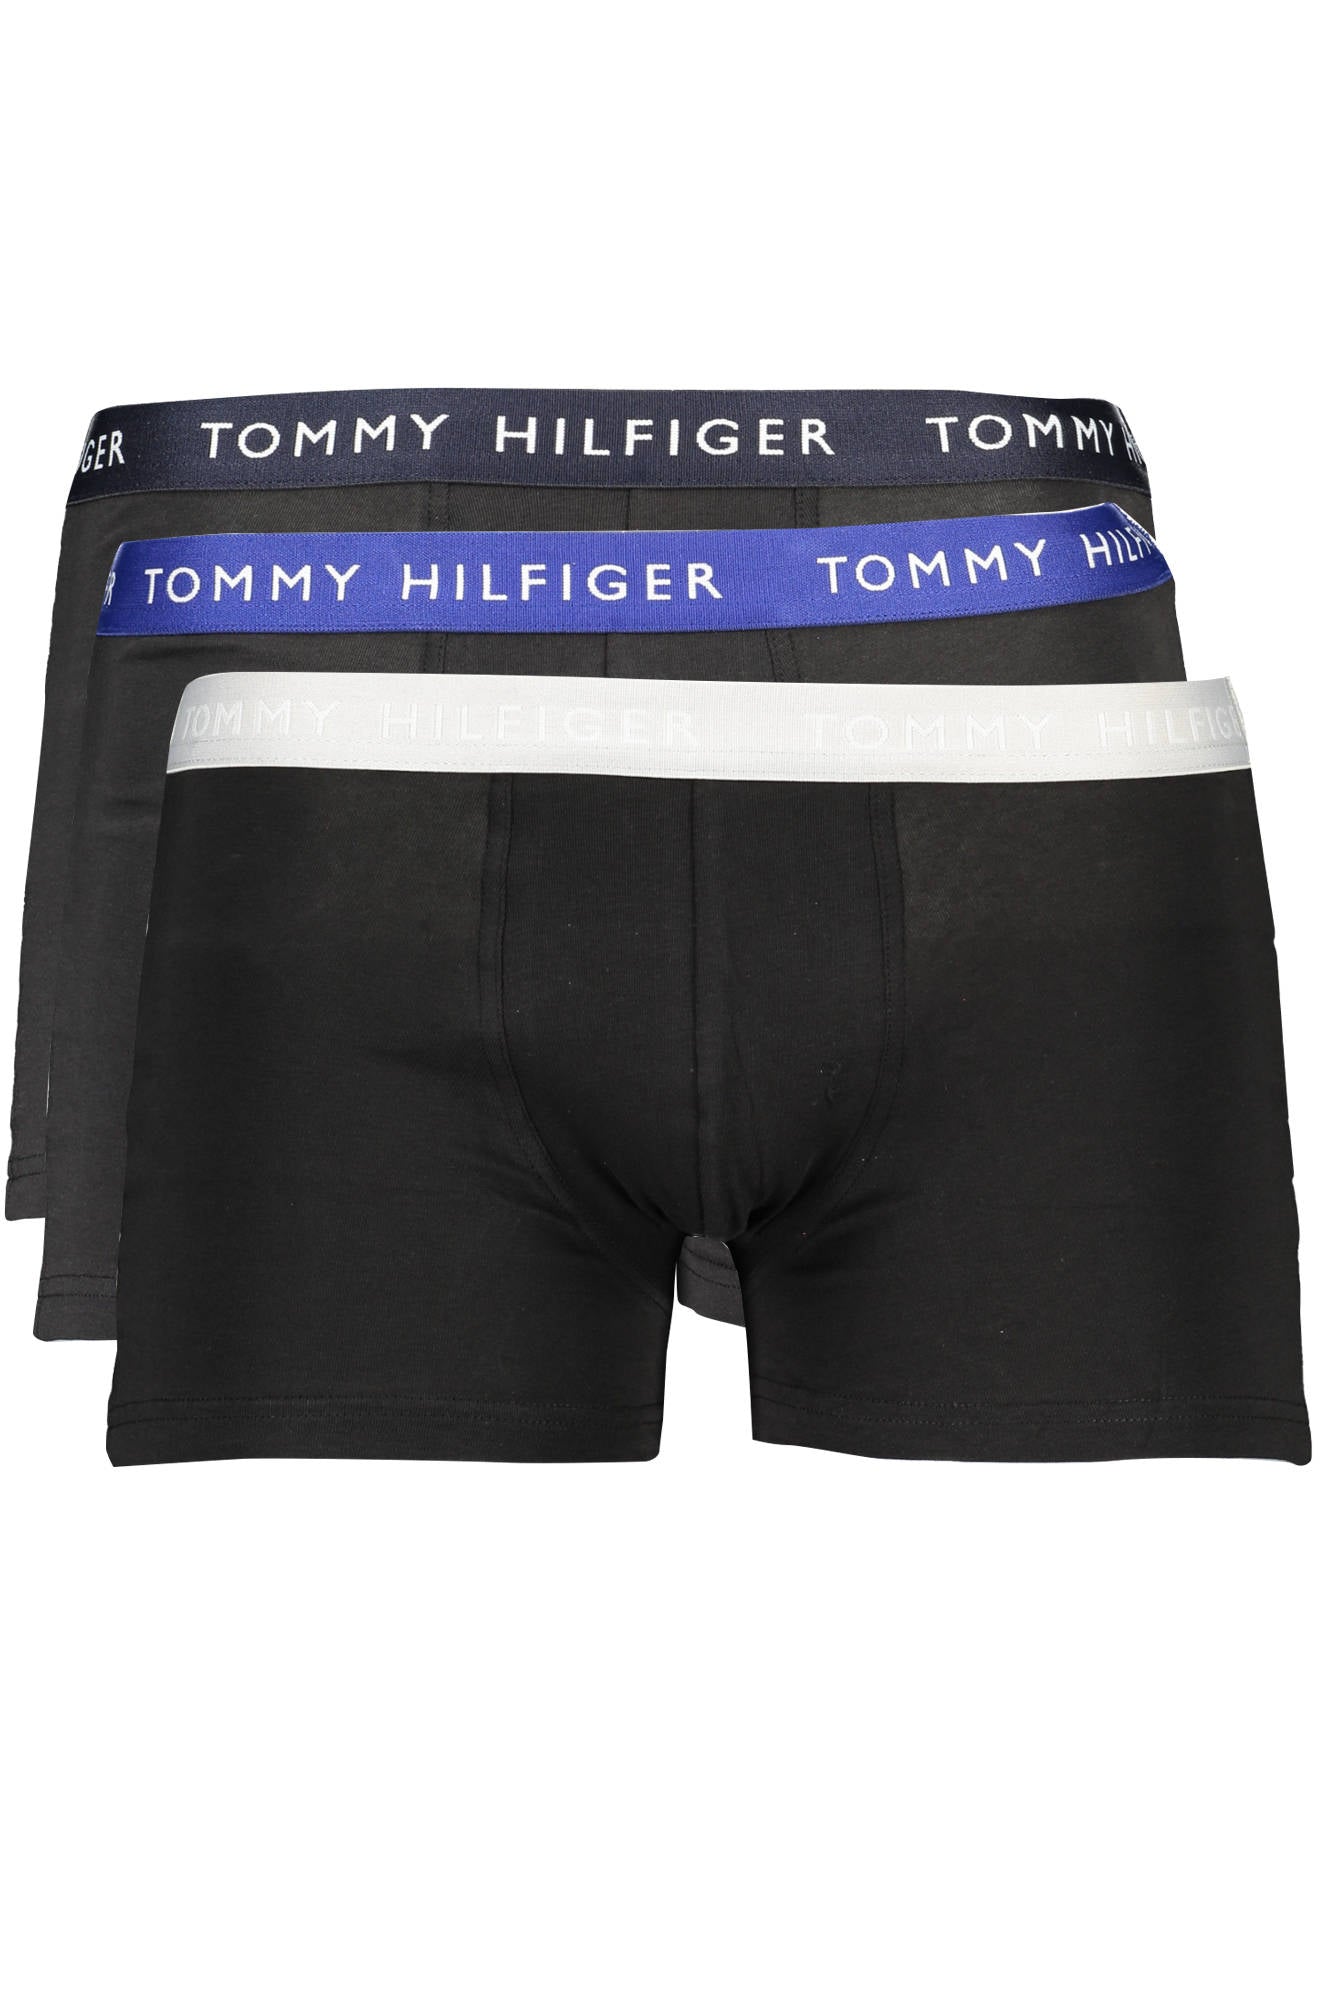 TOMMY HILFIGER BOXER Uomo